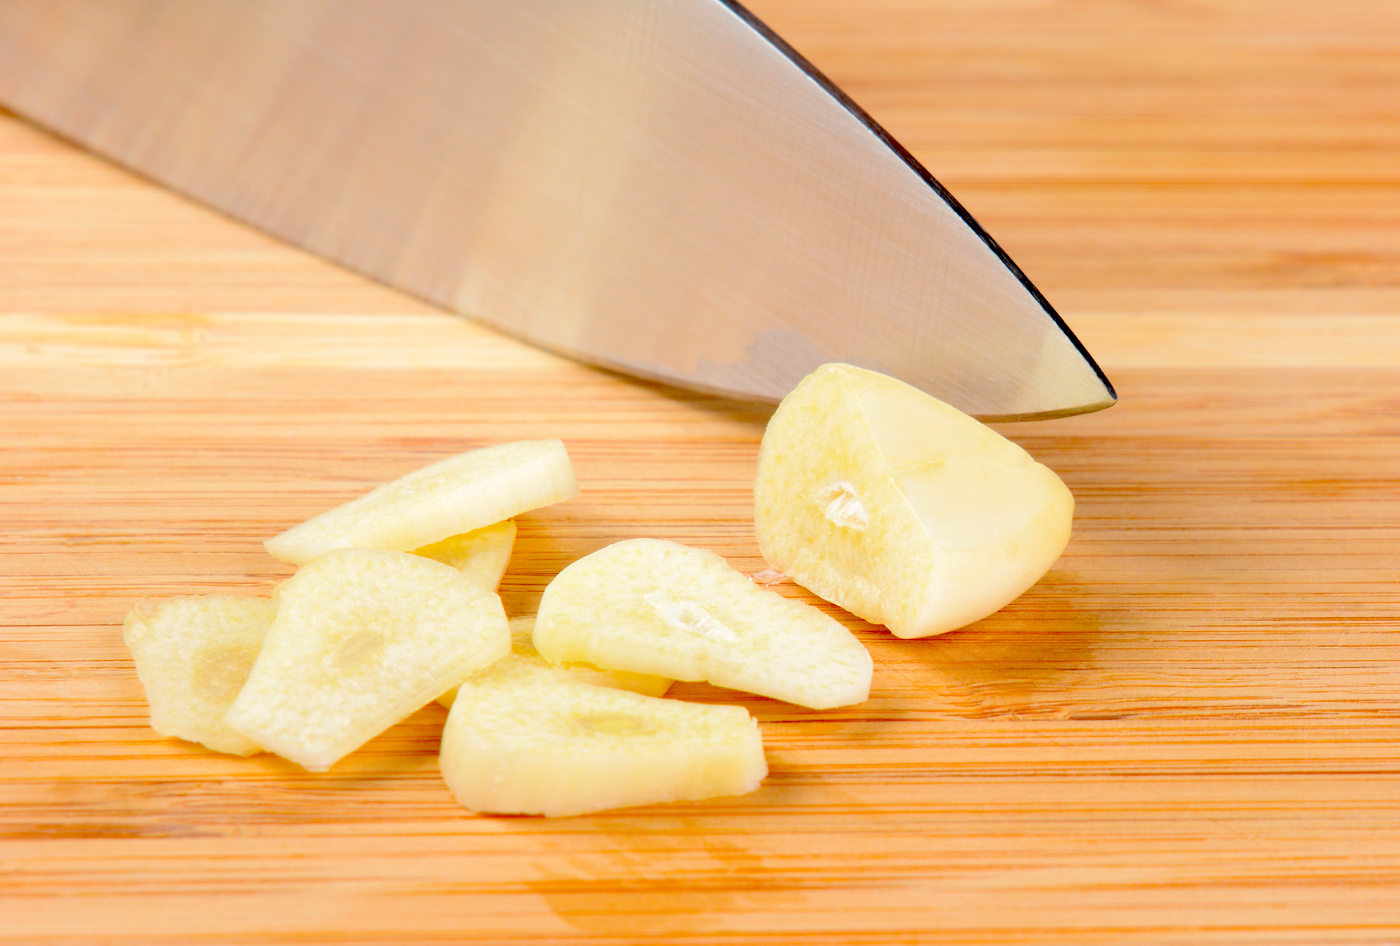 Slicing garlic with a knife on a cutting board